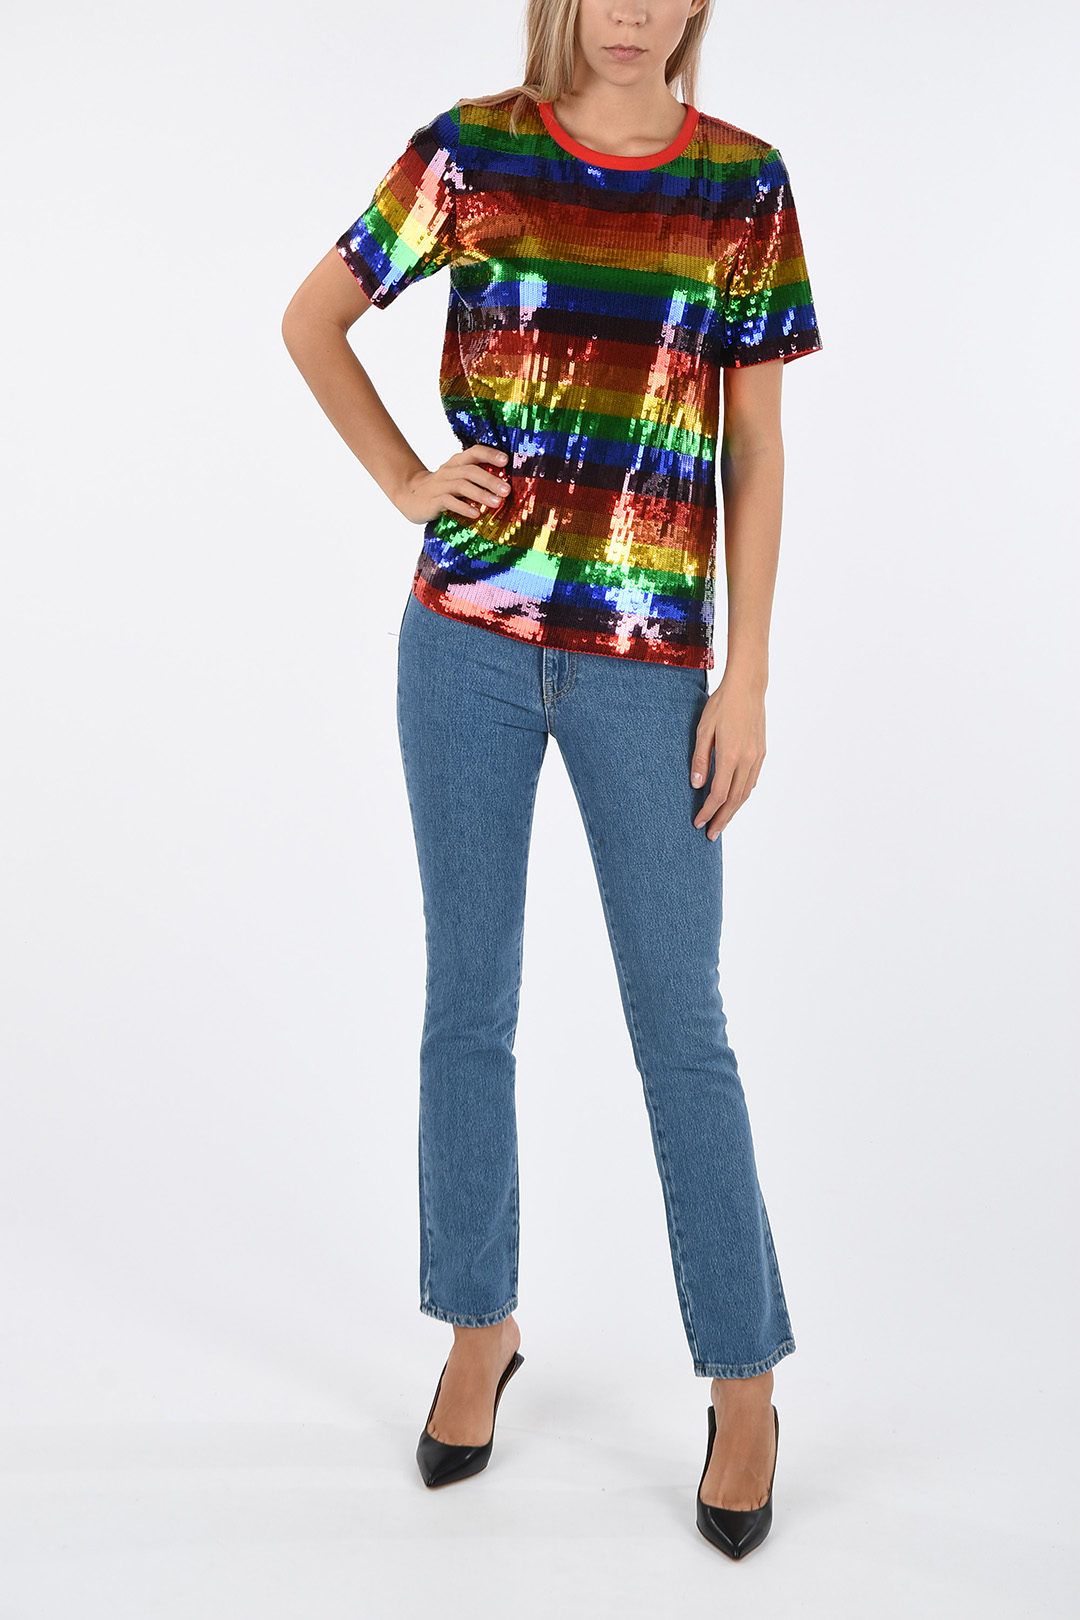 michael kors rainbow t shirt